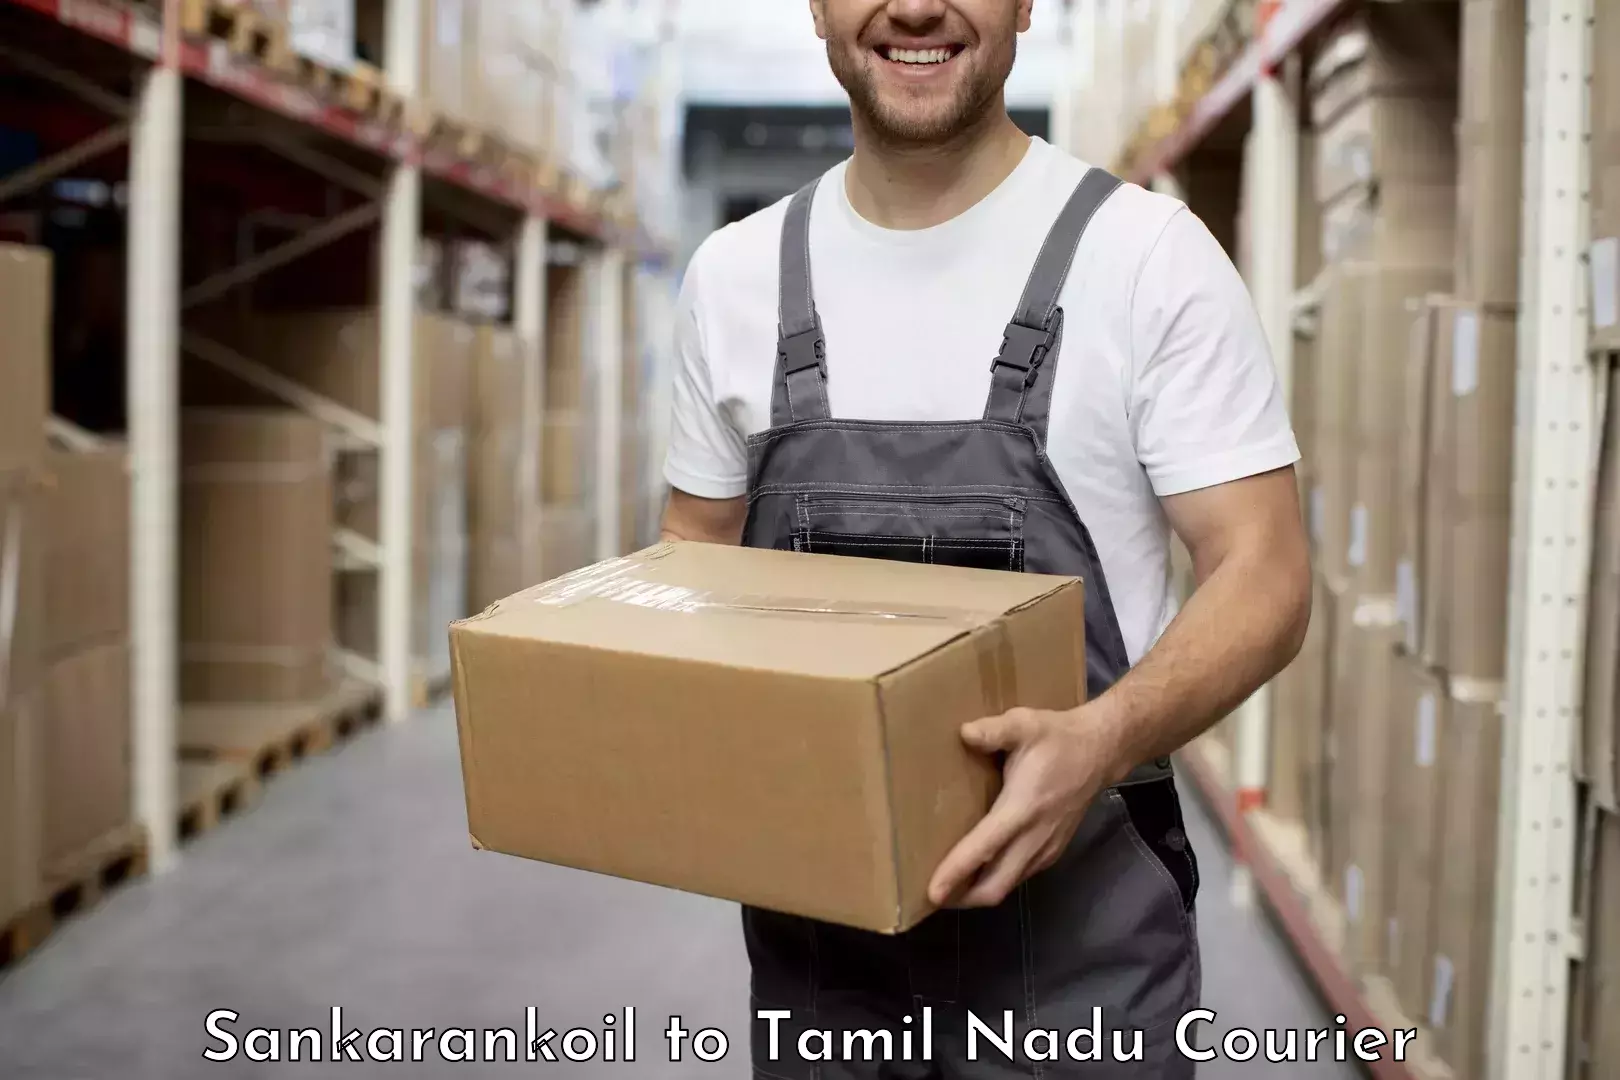 International courier networks Sankarankoil to Mayiladuthurai